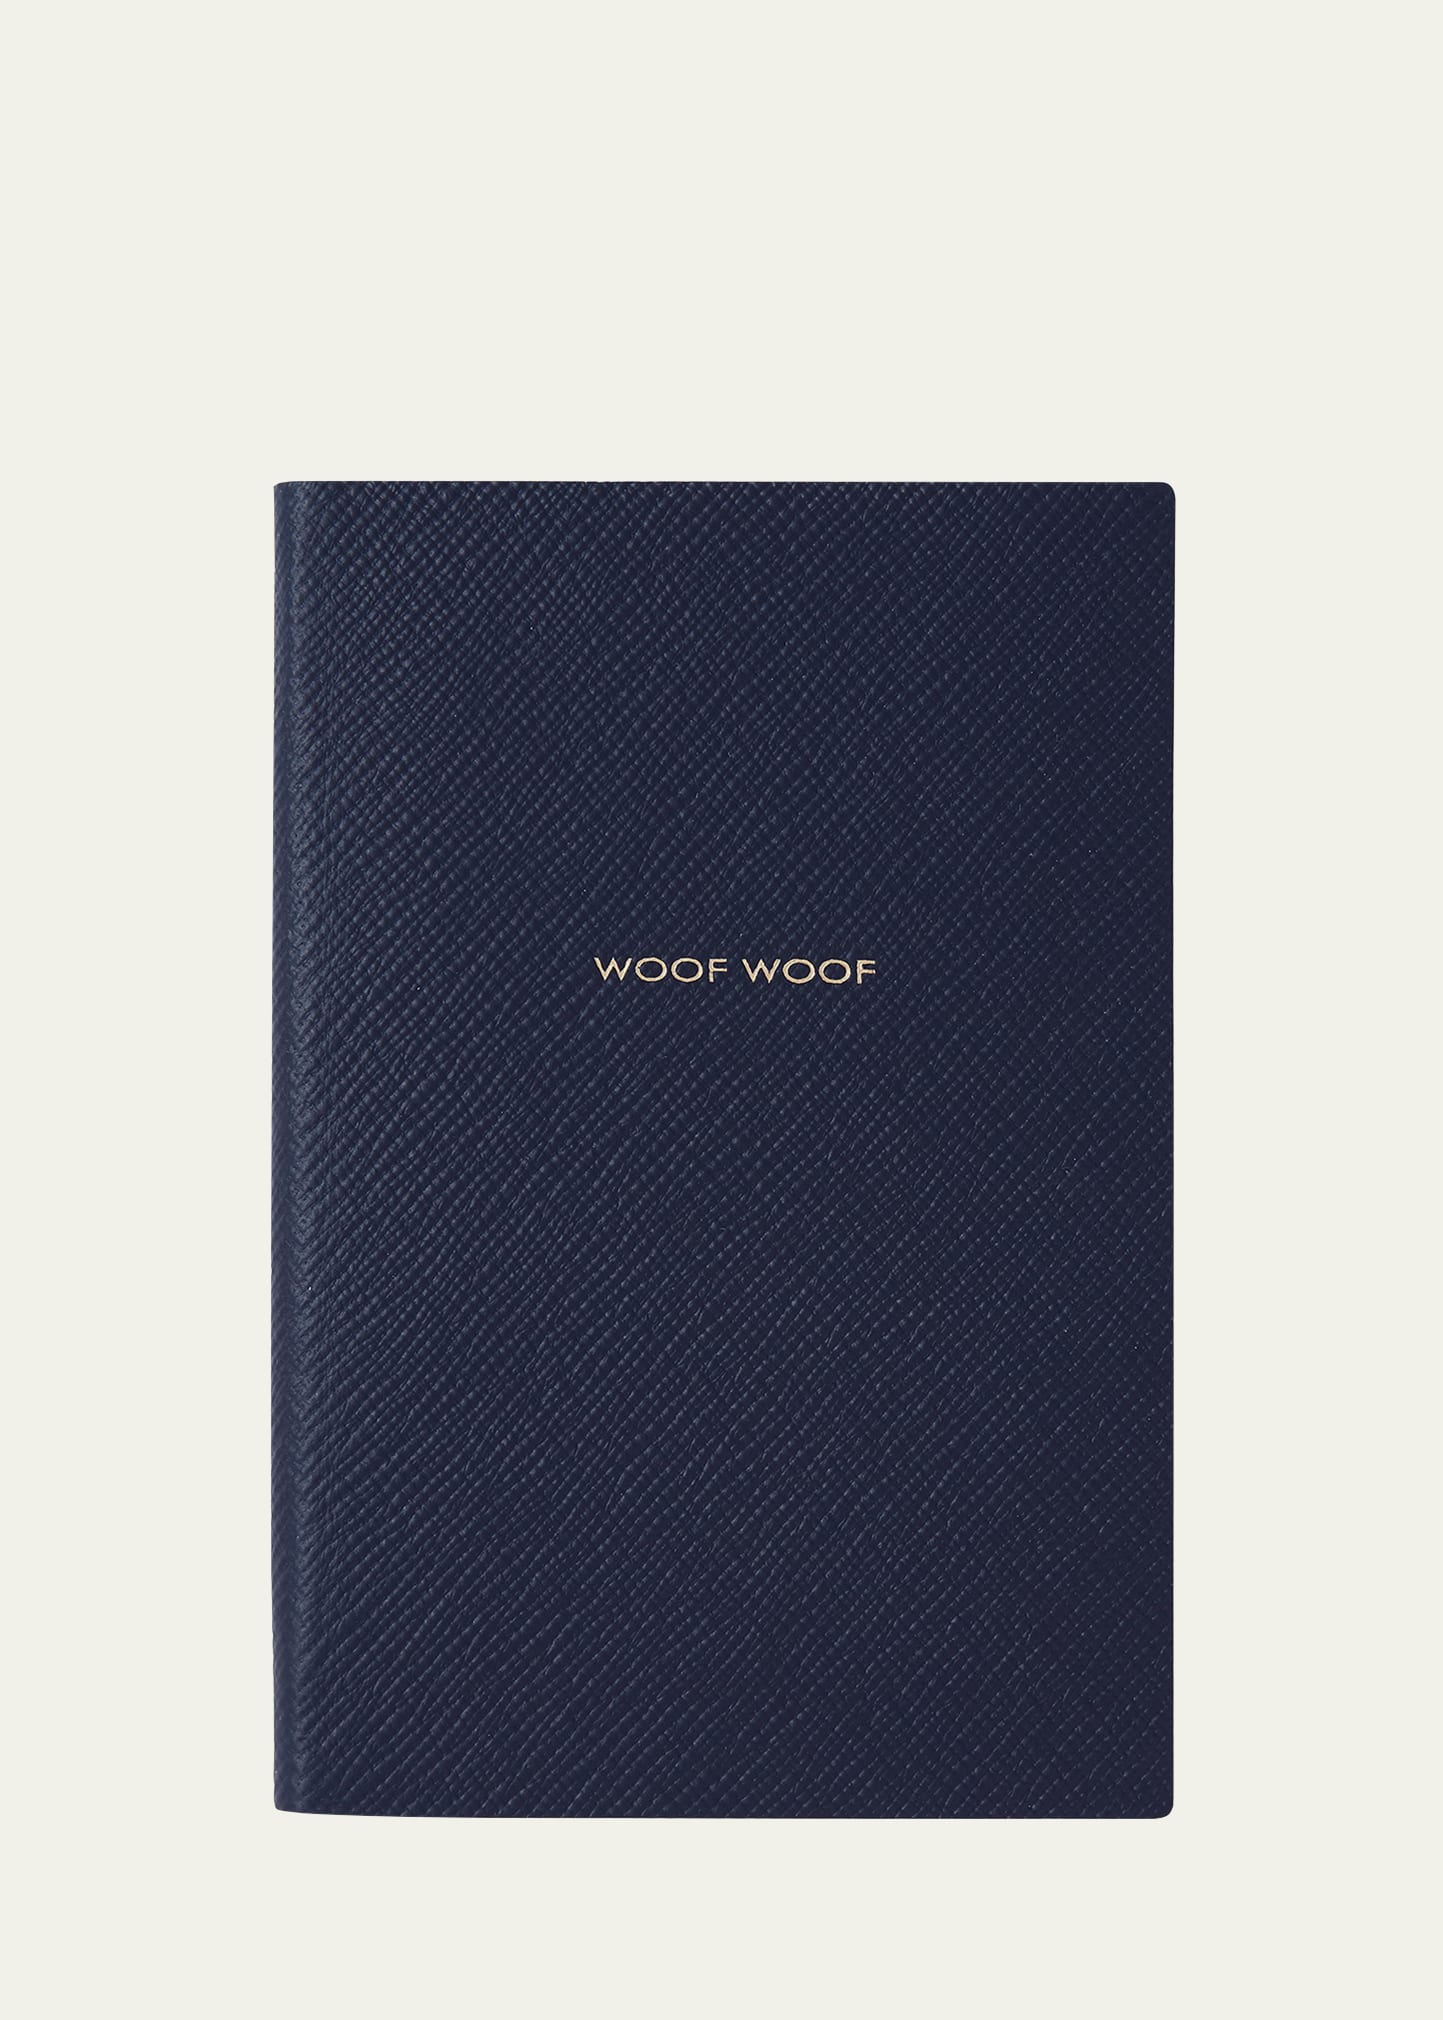 Chelsea "Woof Woof" Cross-Grain Leather Notebook